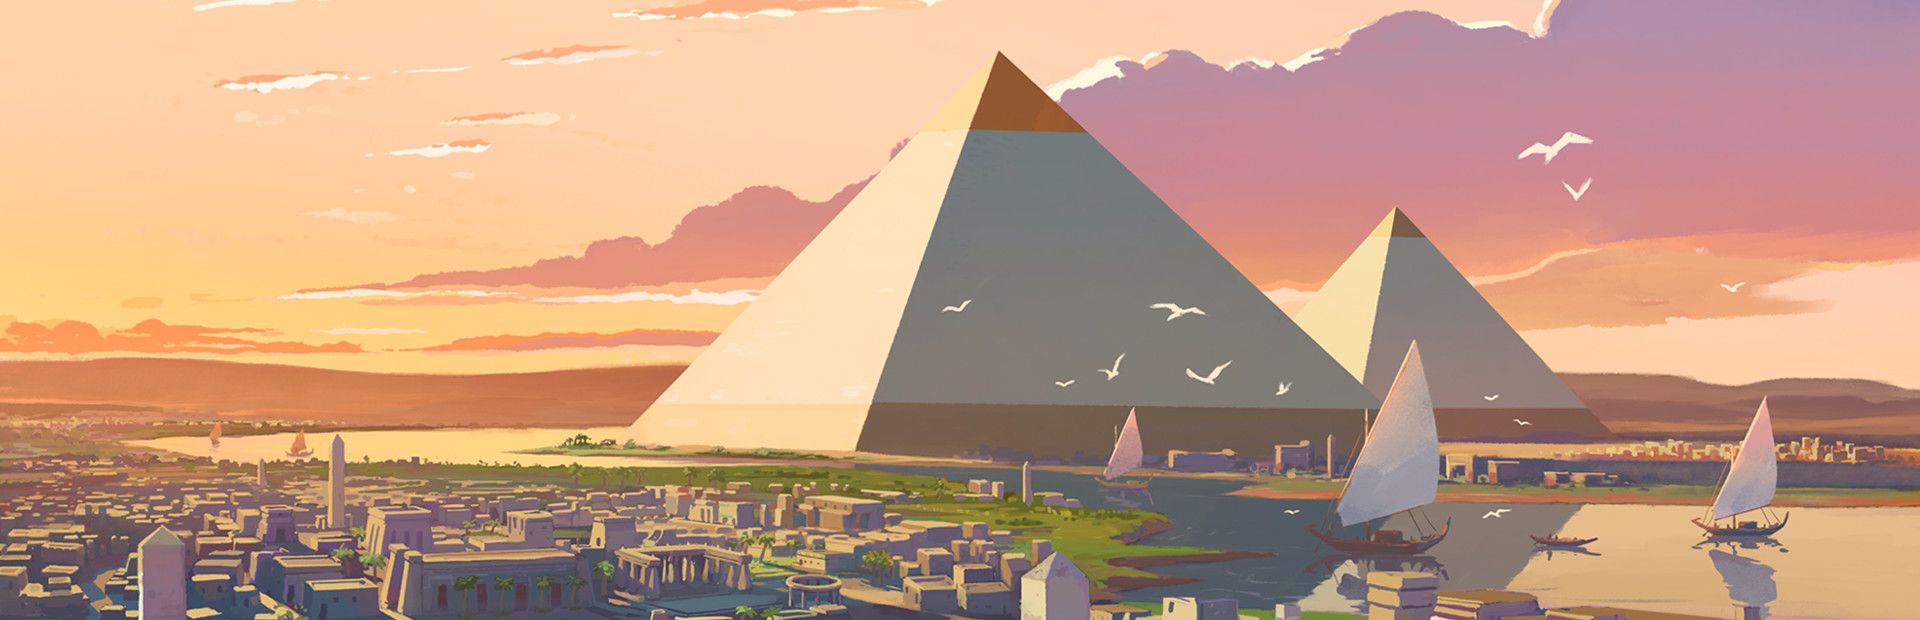 Pharaoh: A New Era cover image